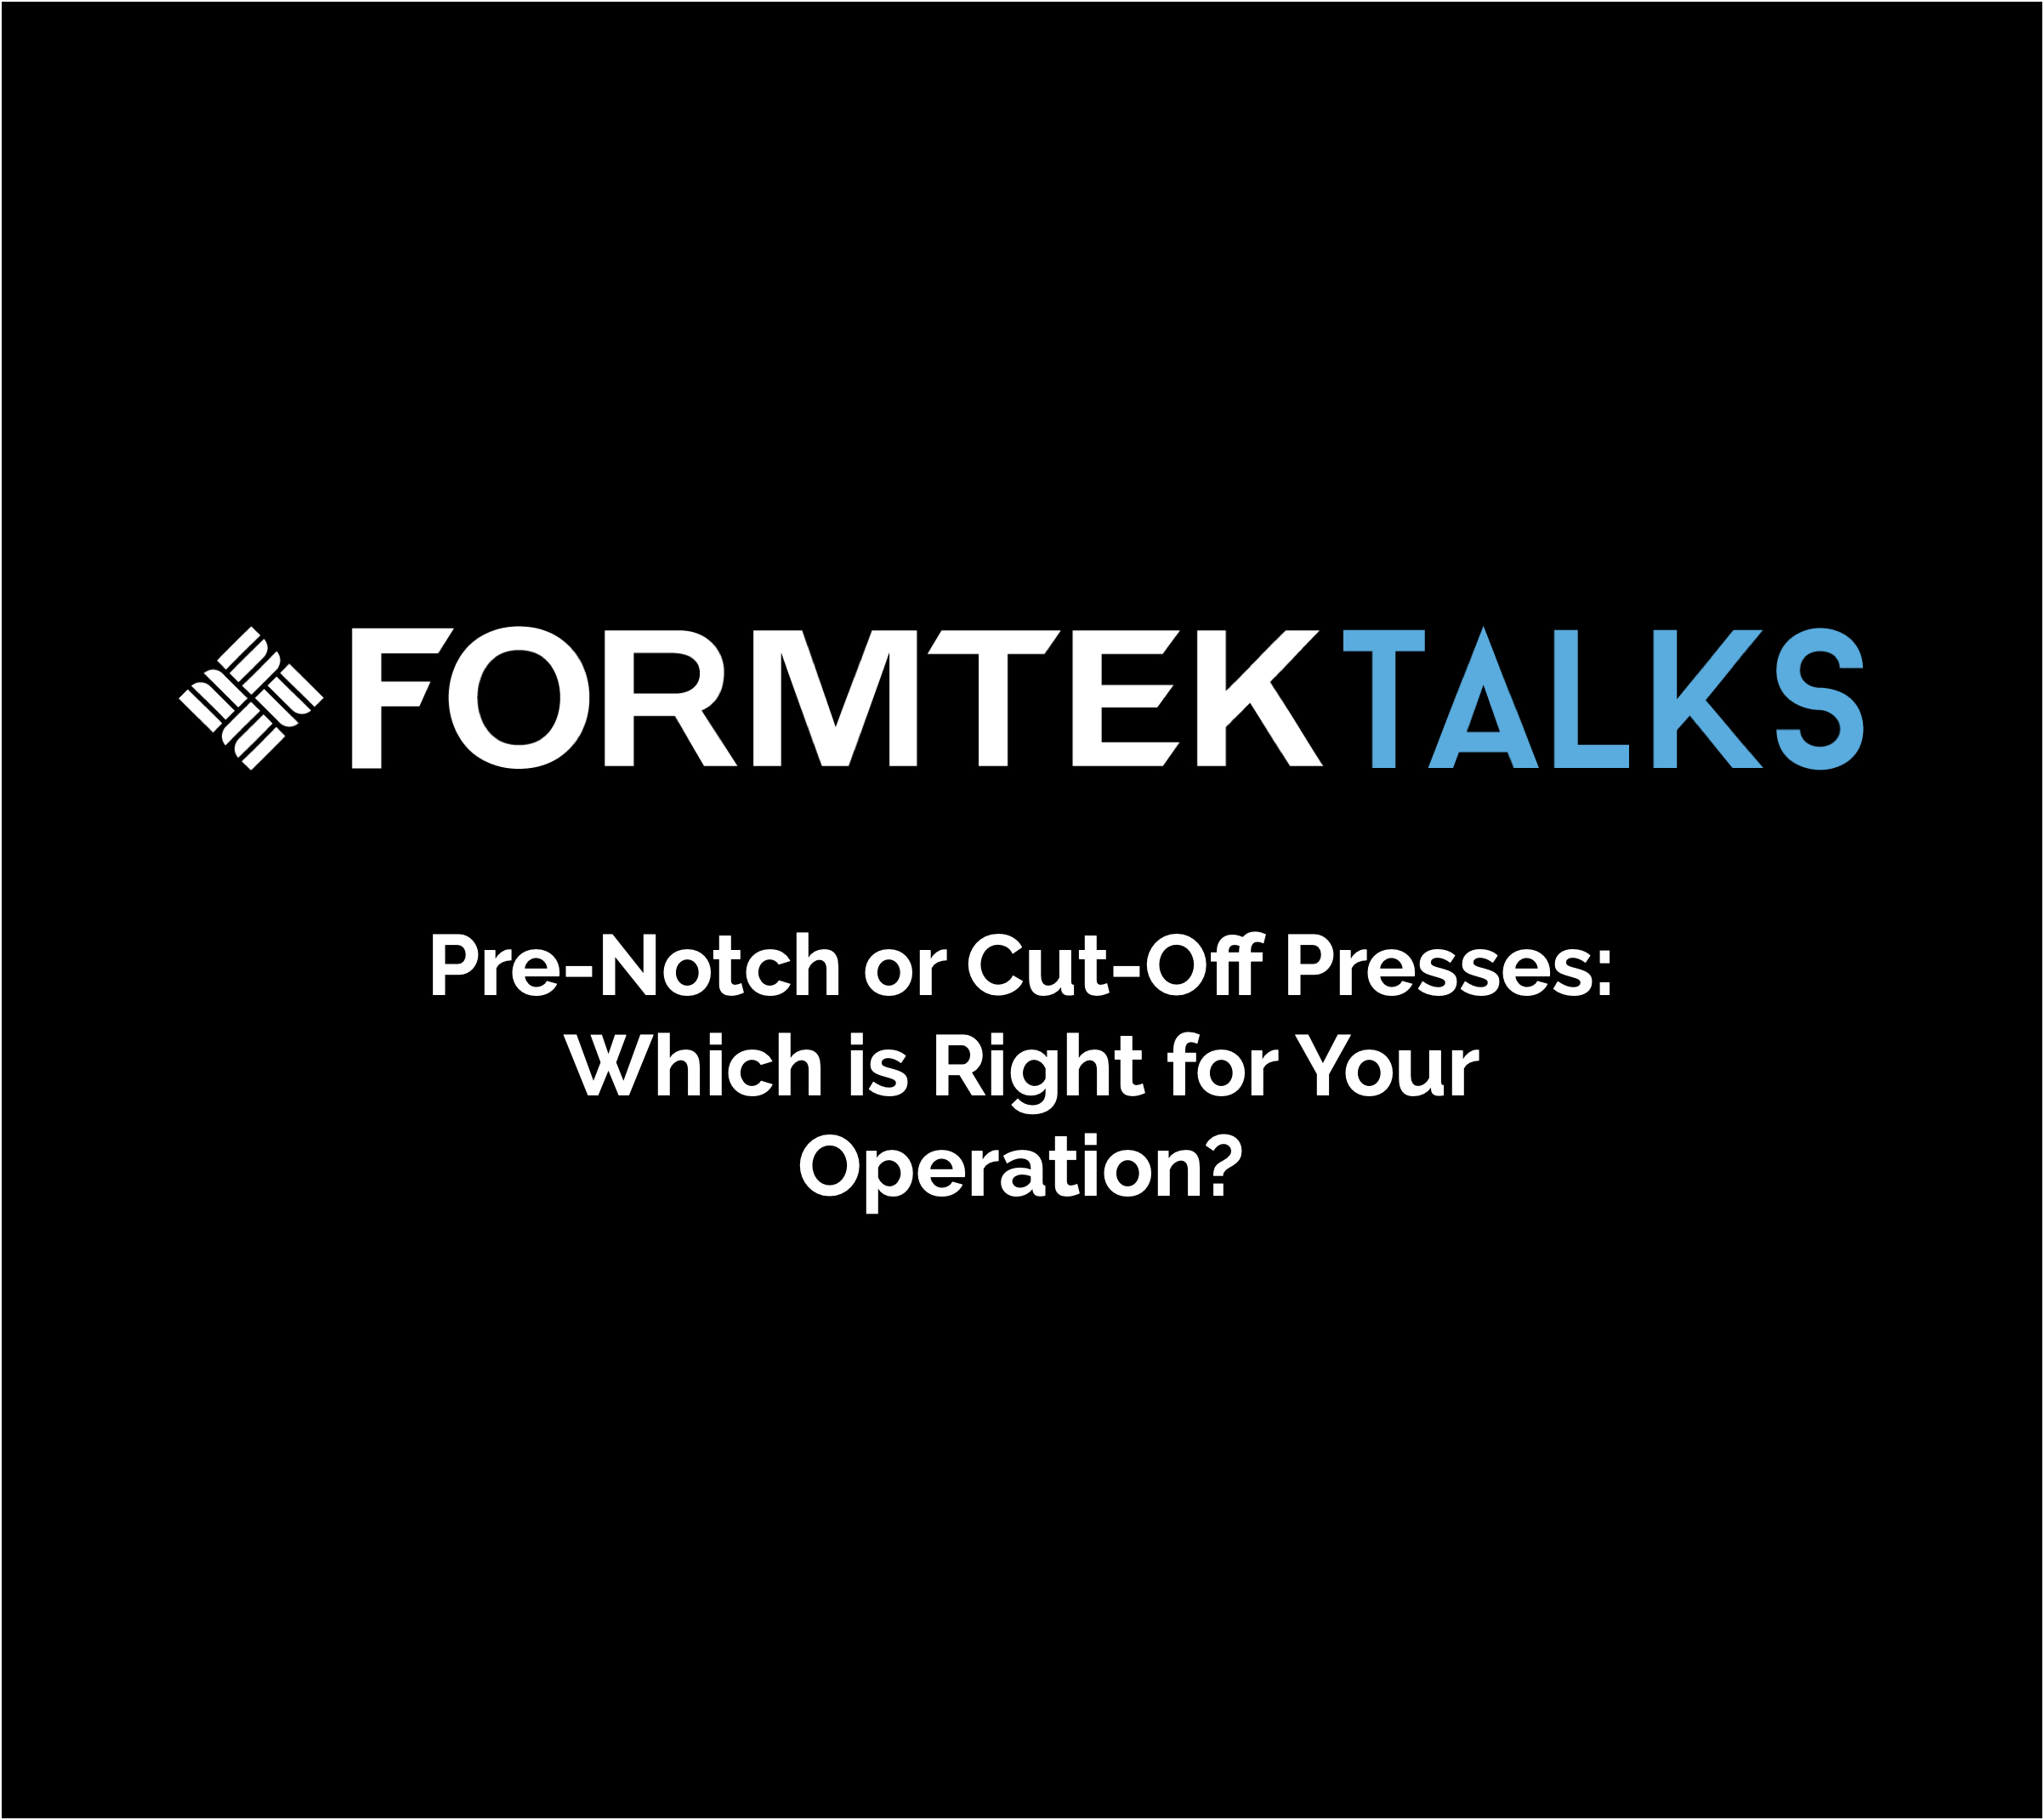 Formtek Talks Pre-Notch Post Cut